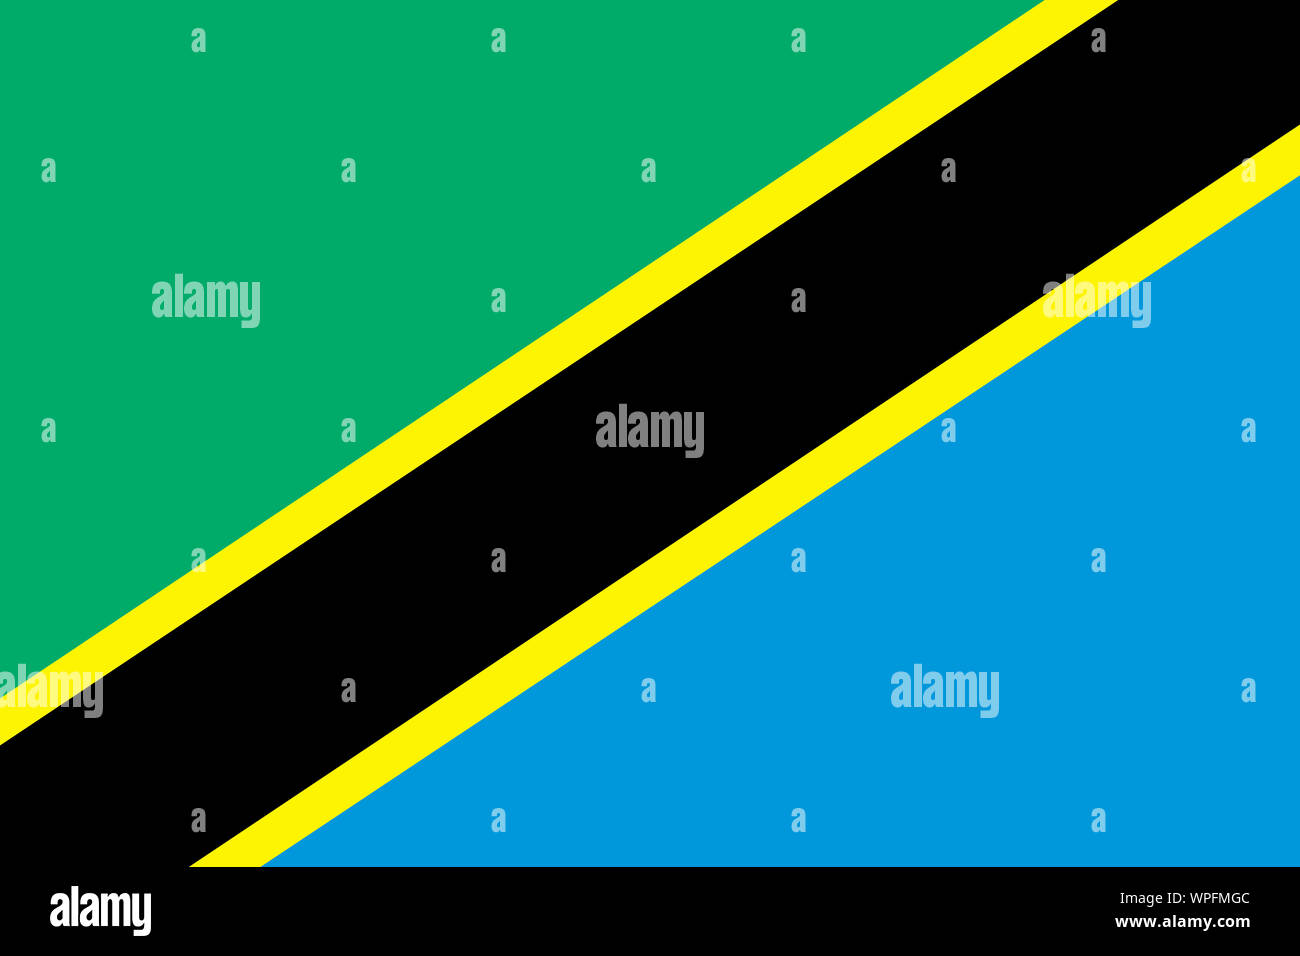 A Tanzania Flag blue black yellow horizontal stripe green blue background illustration Stock Photo